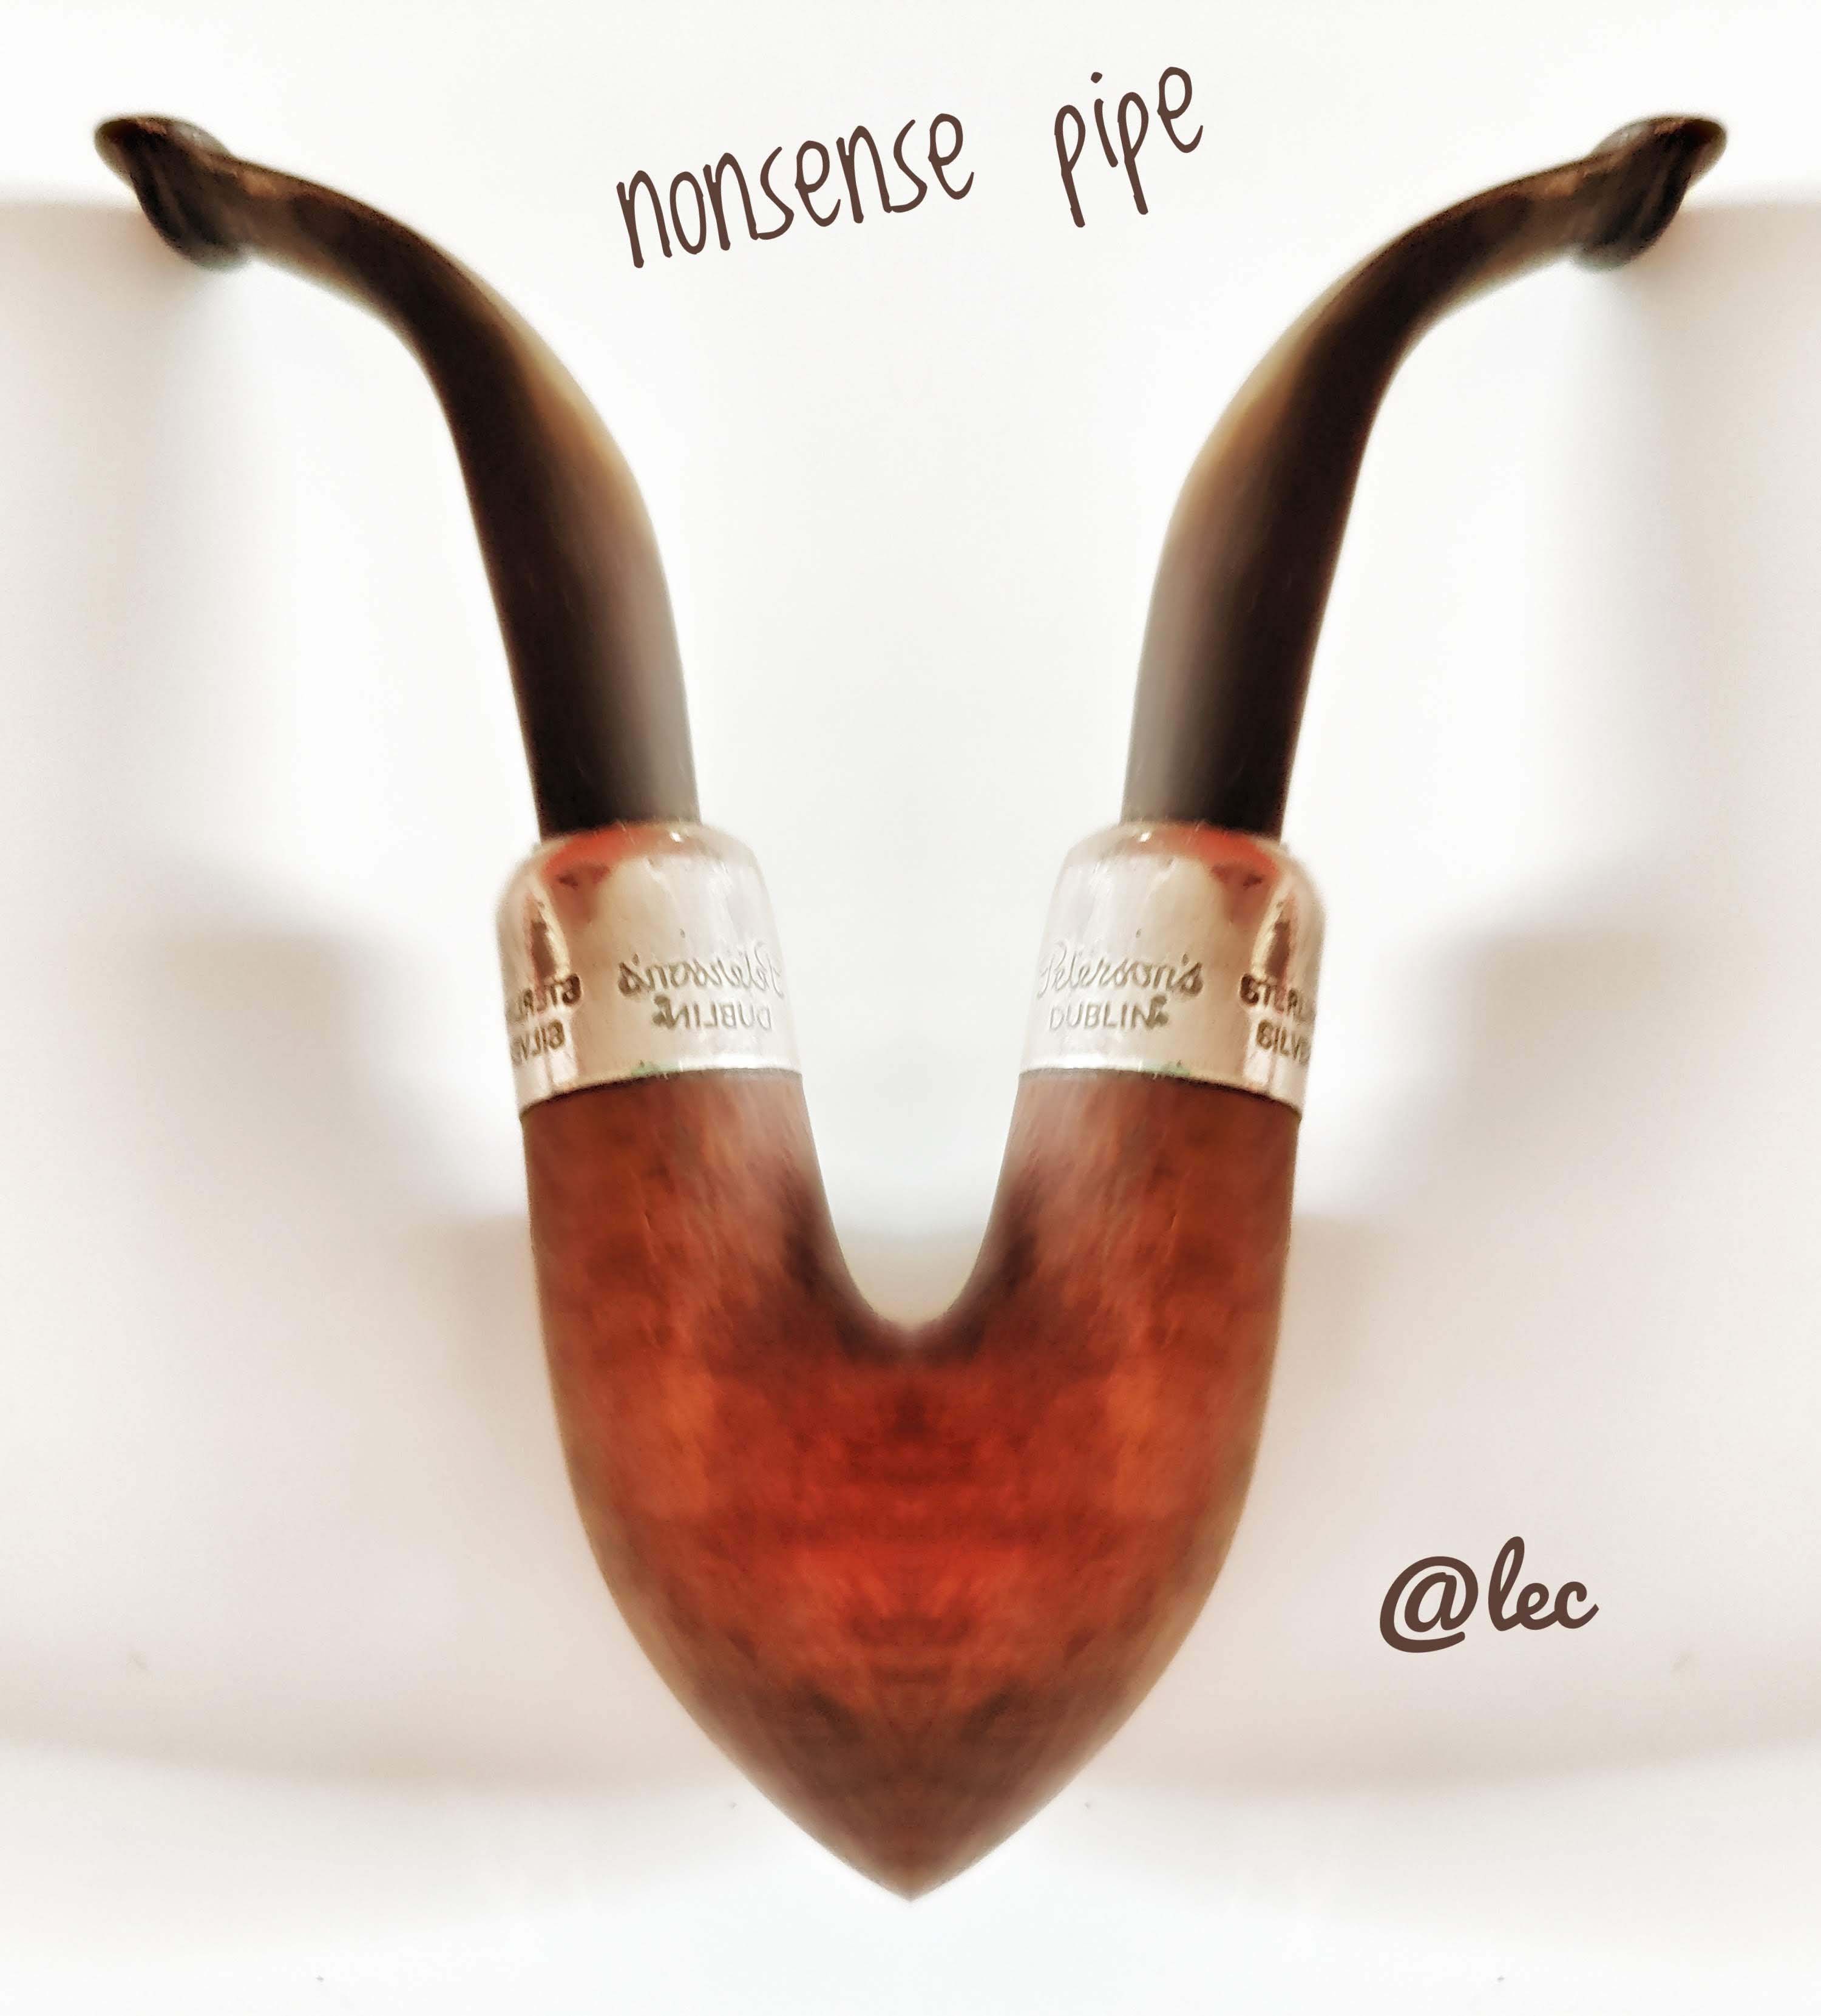 nonsense pipe